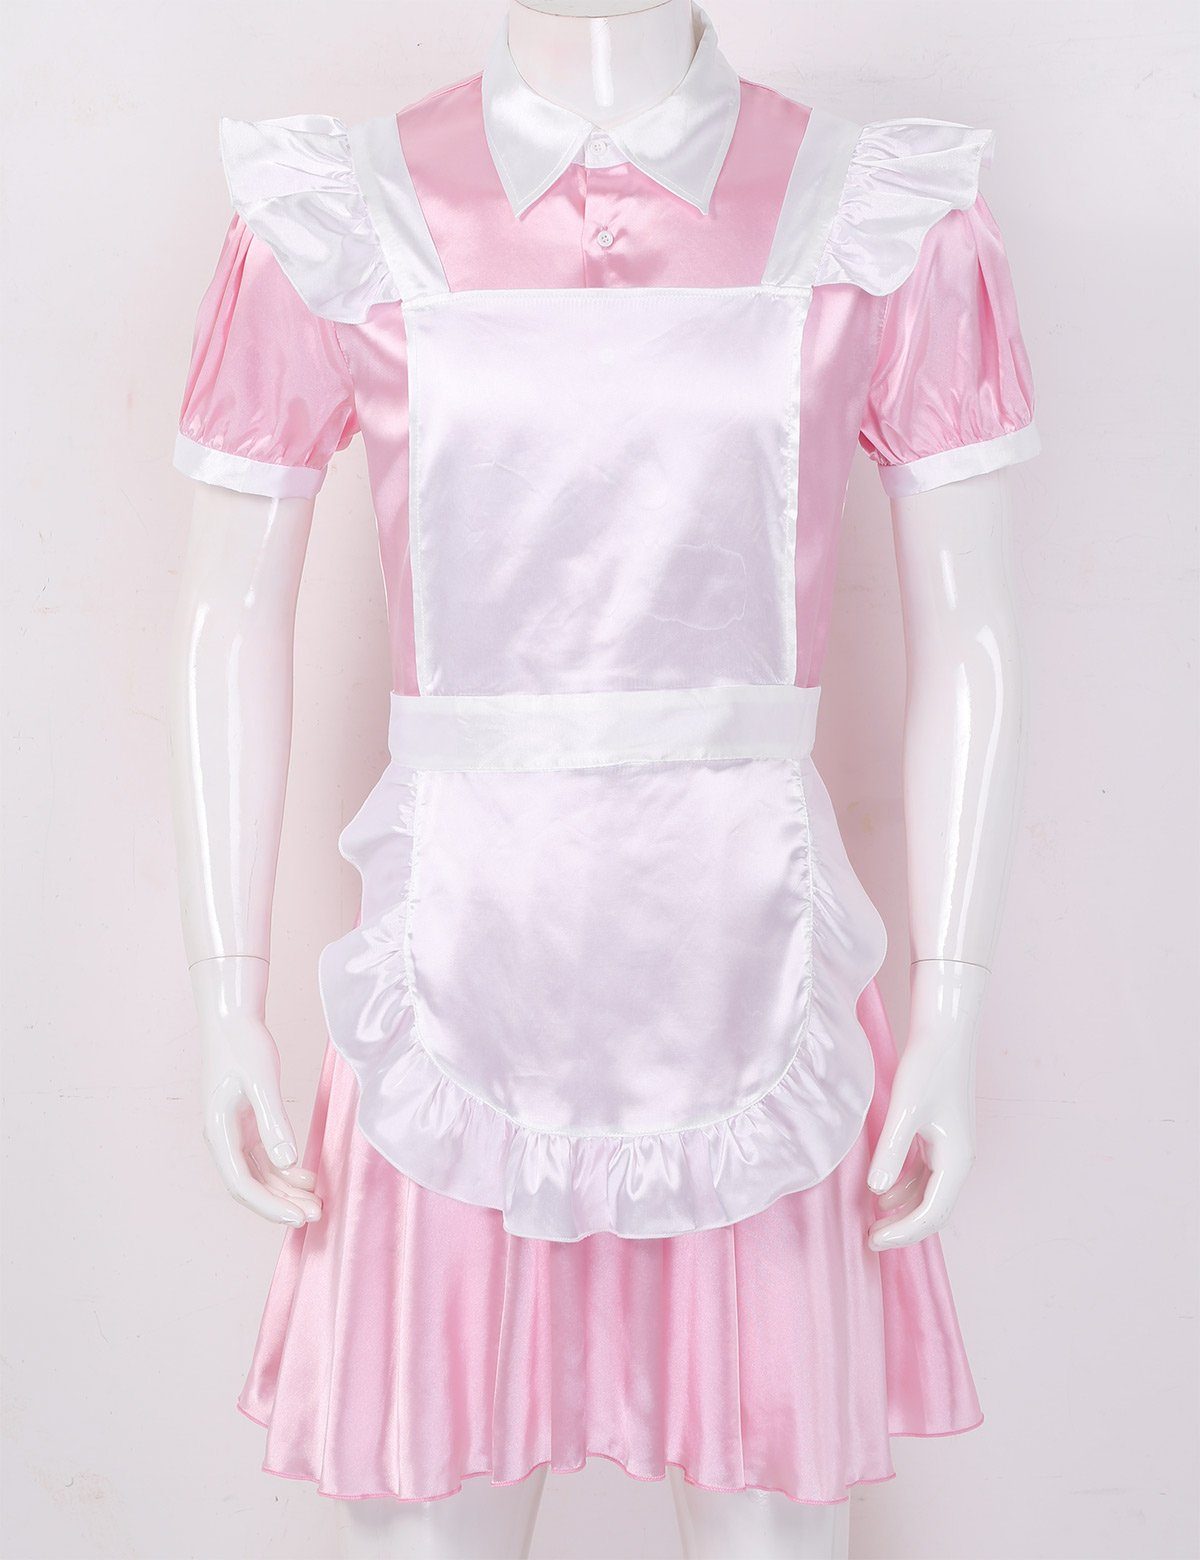 Sissy Maid Dress - Sissy Panty Shop